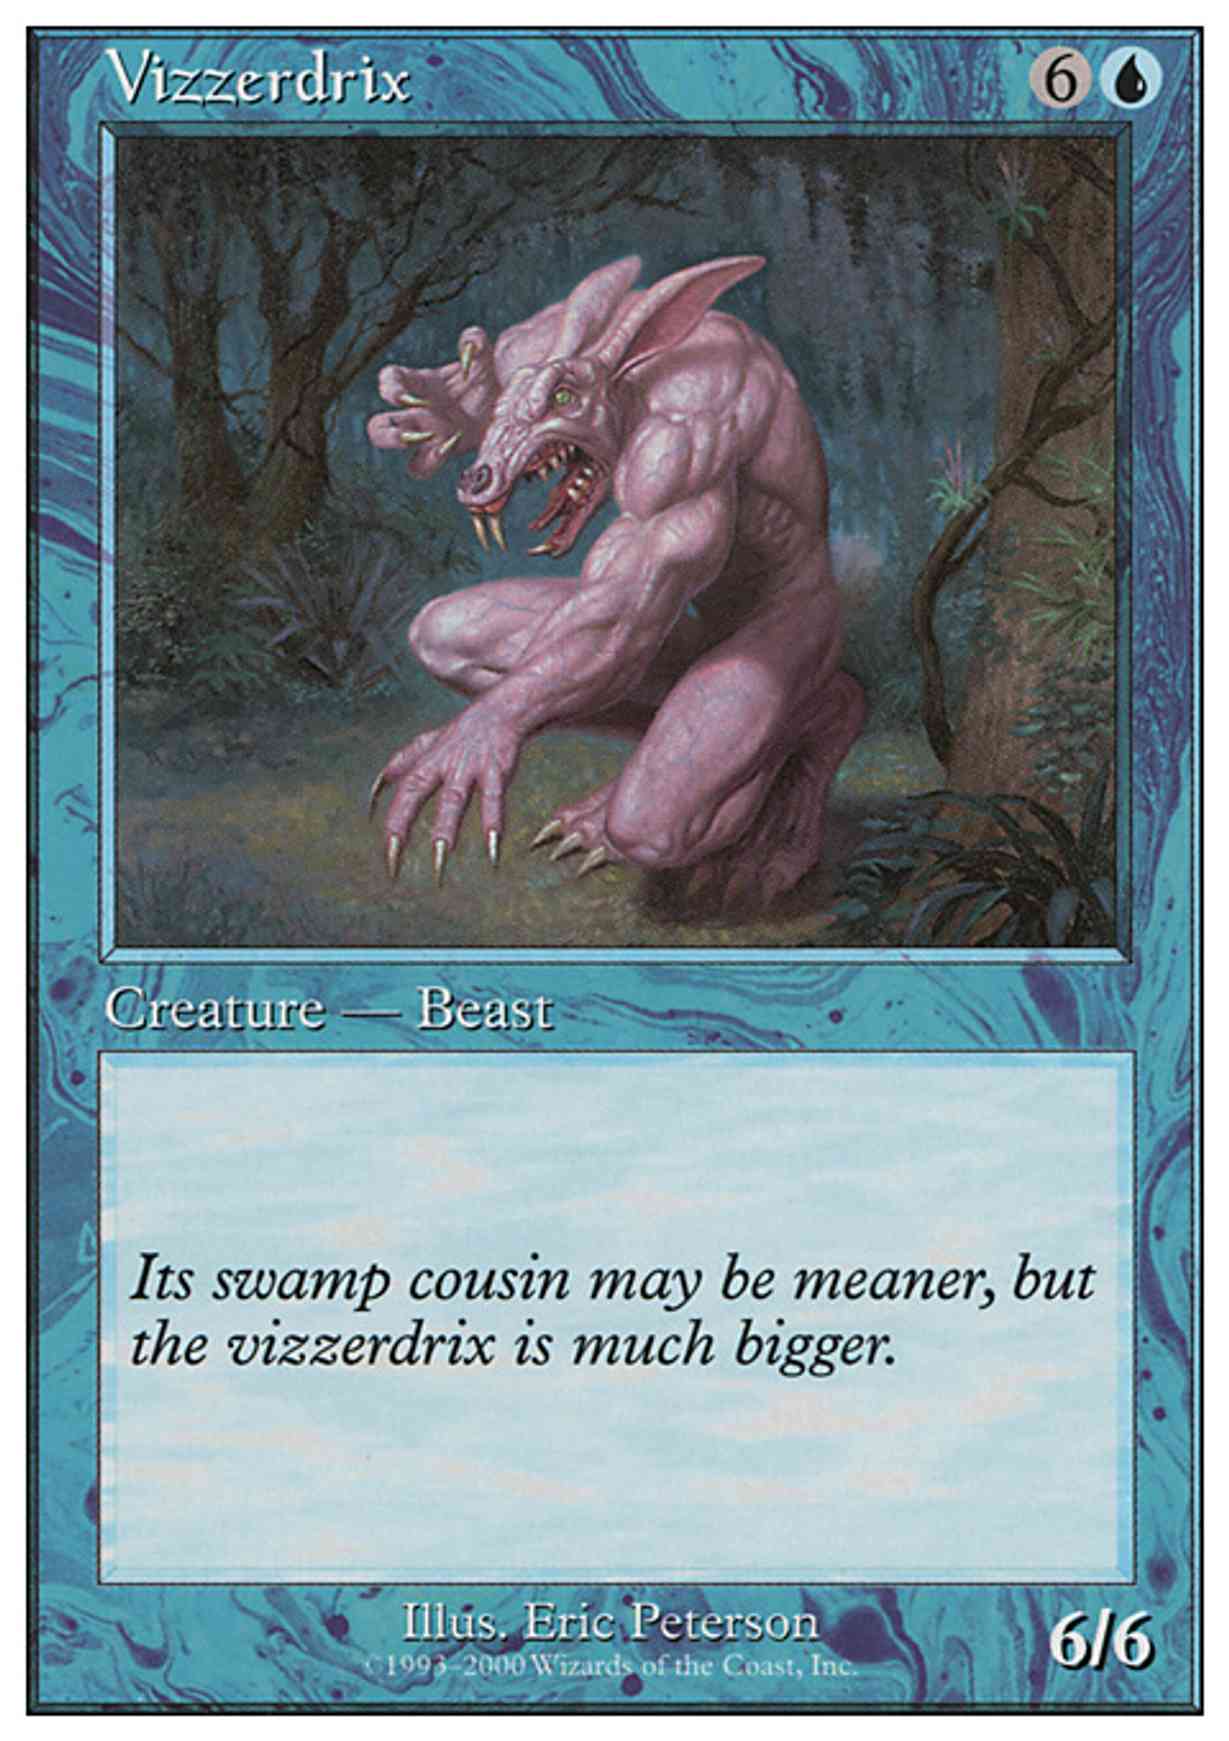 Vizzerdrix magic card front